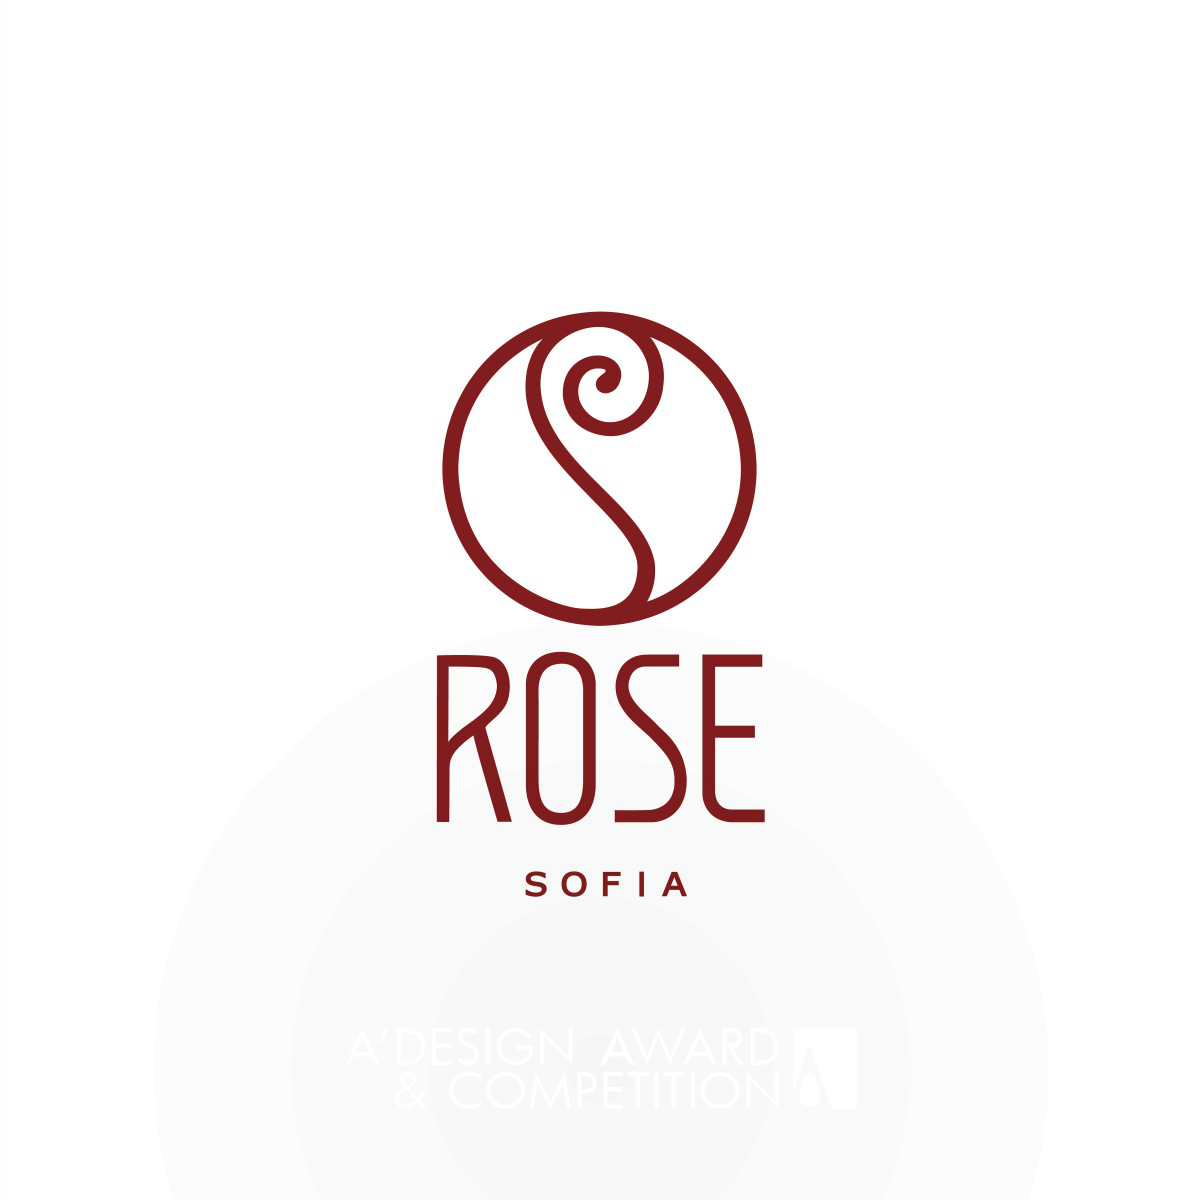 Rose Sofia Logo by Ivan Radev